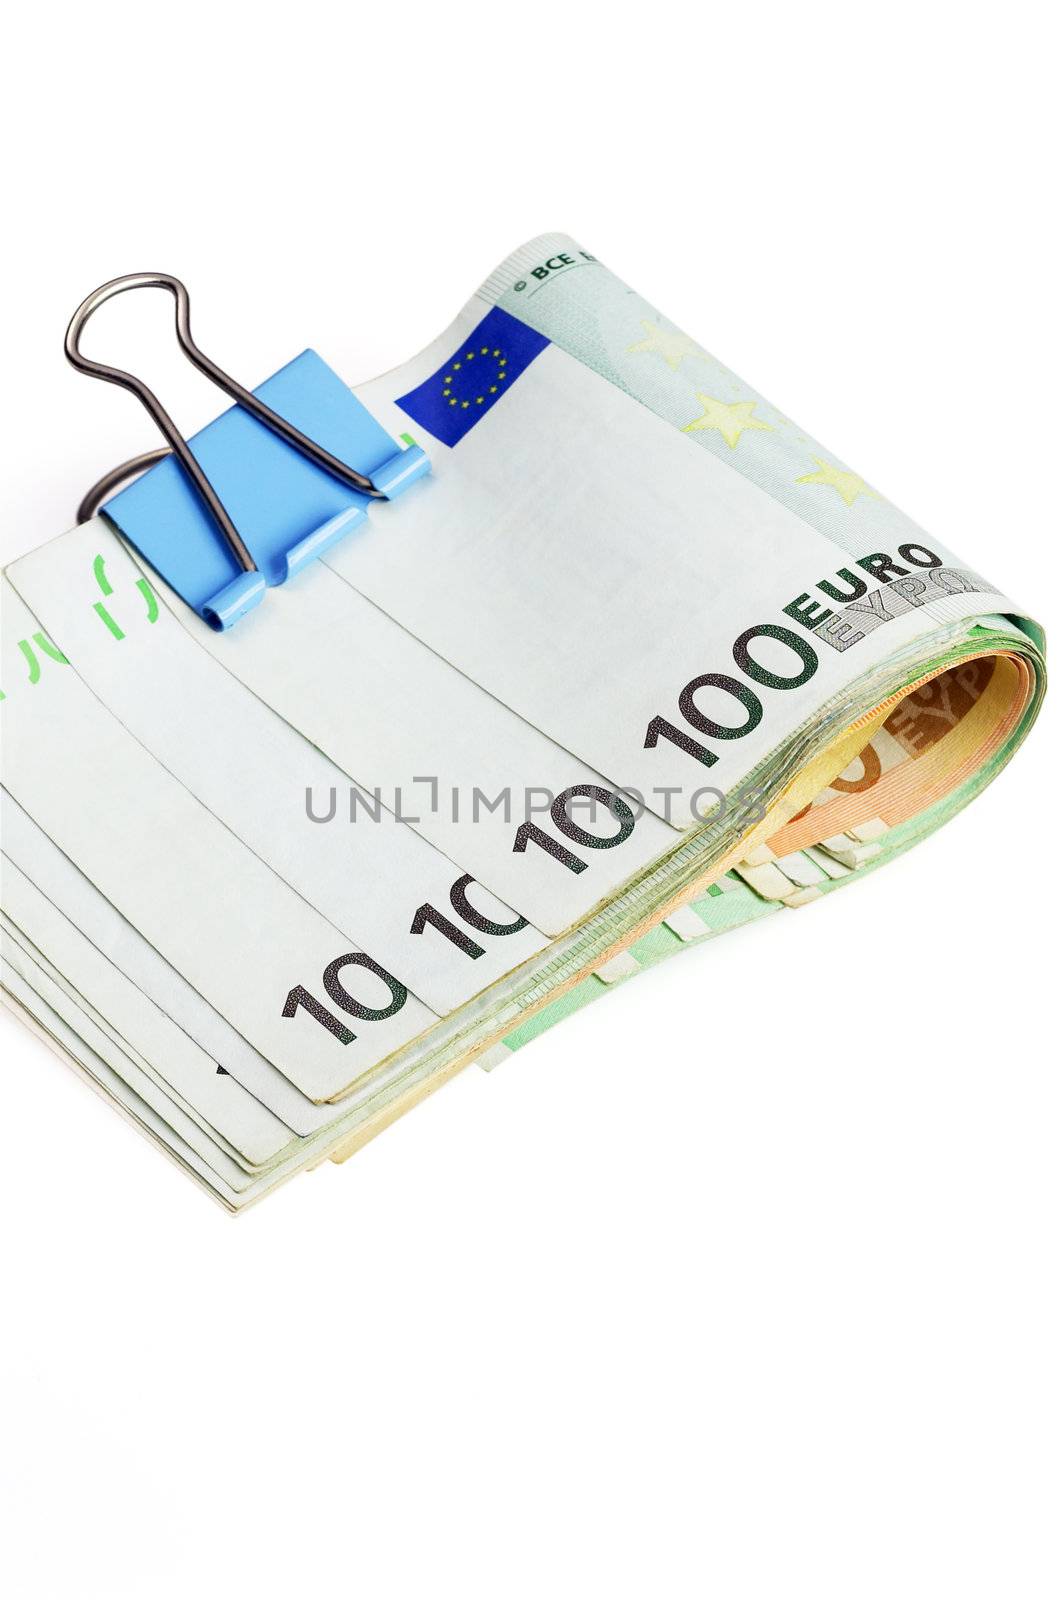 euro bills and clip by keko64